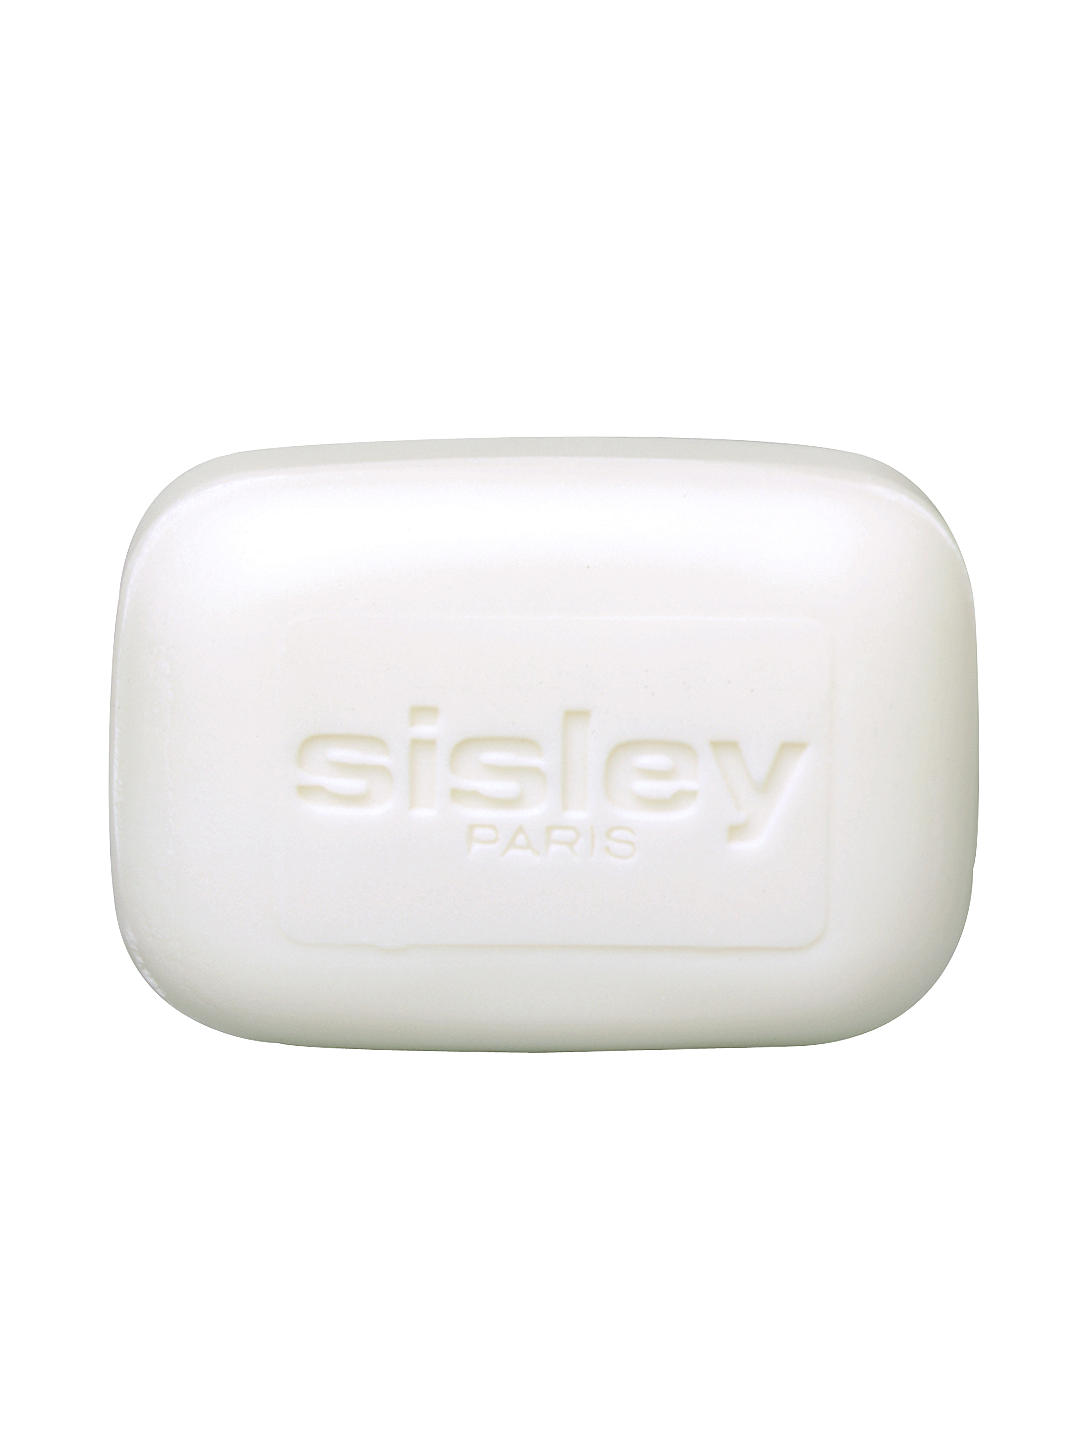 Sisley Soapless Foaming Cleansing Bar, 125g 1